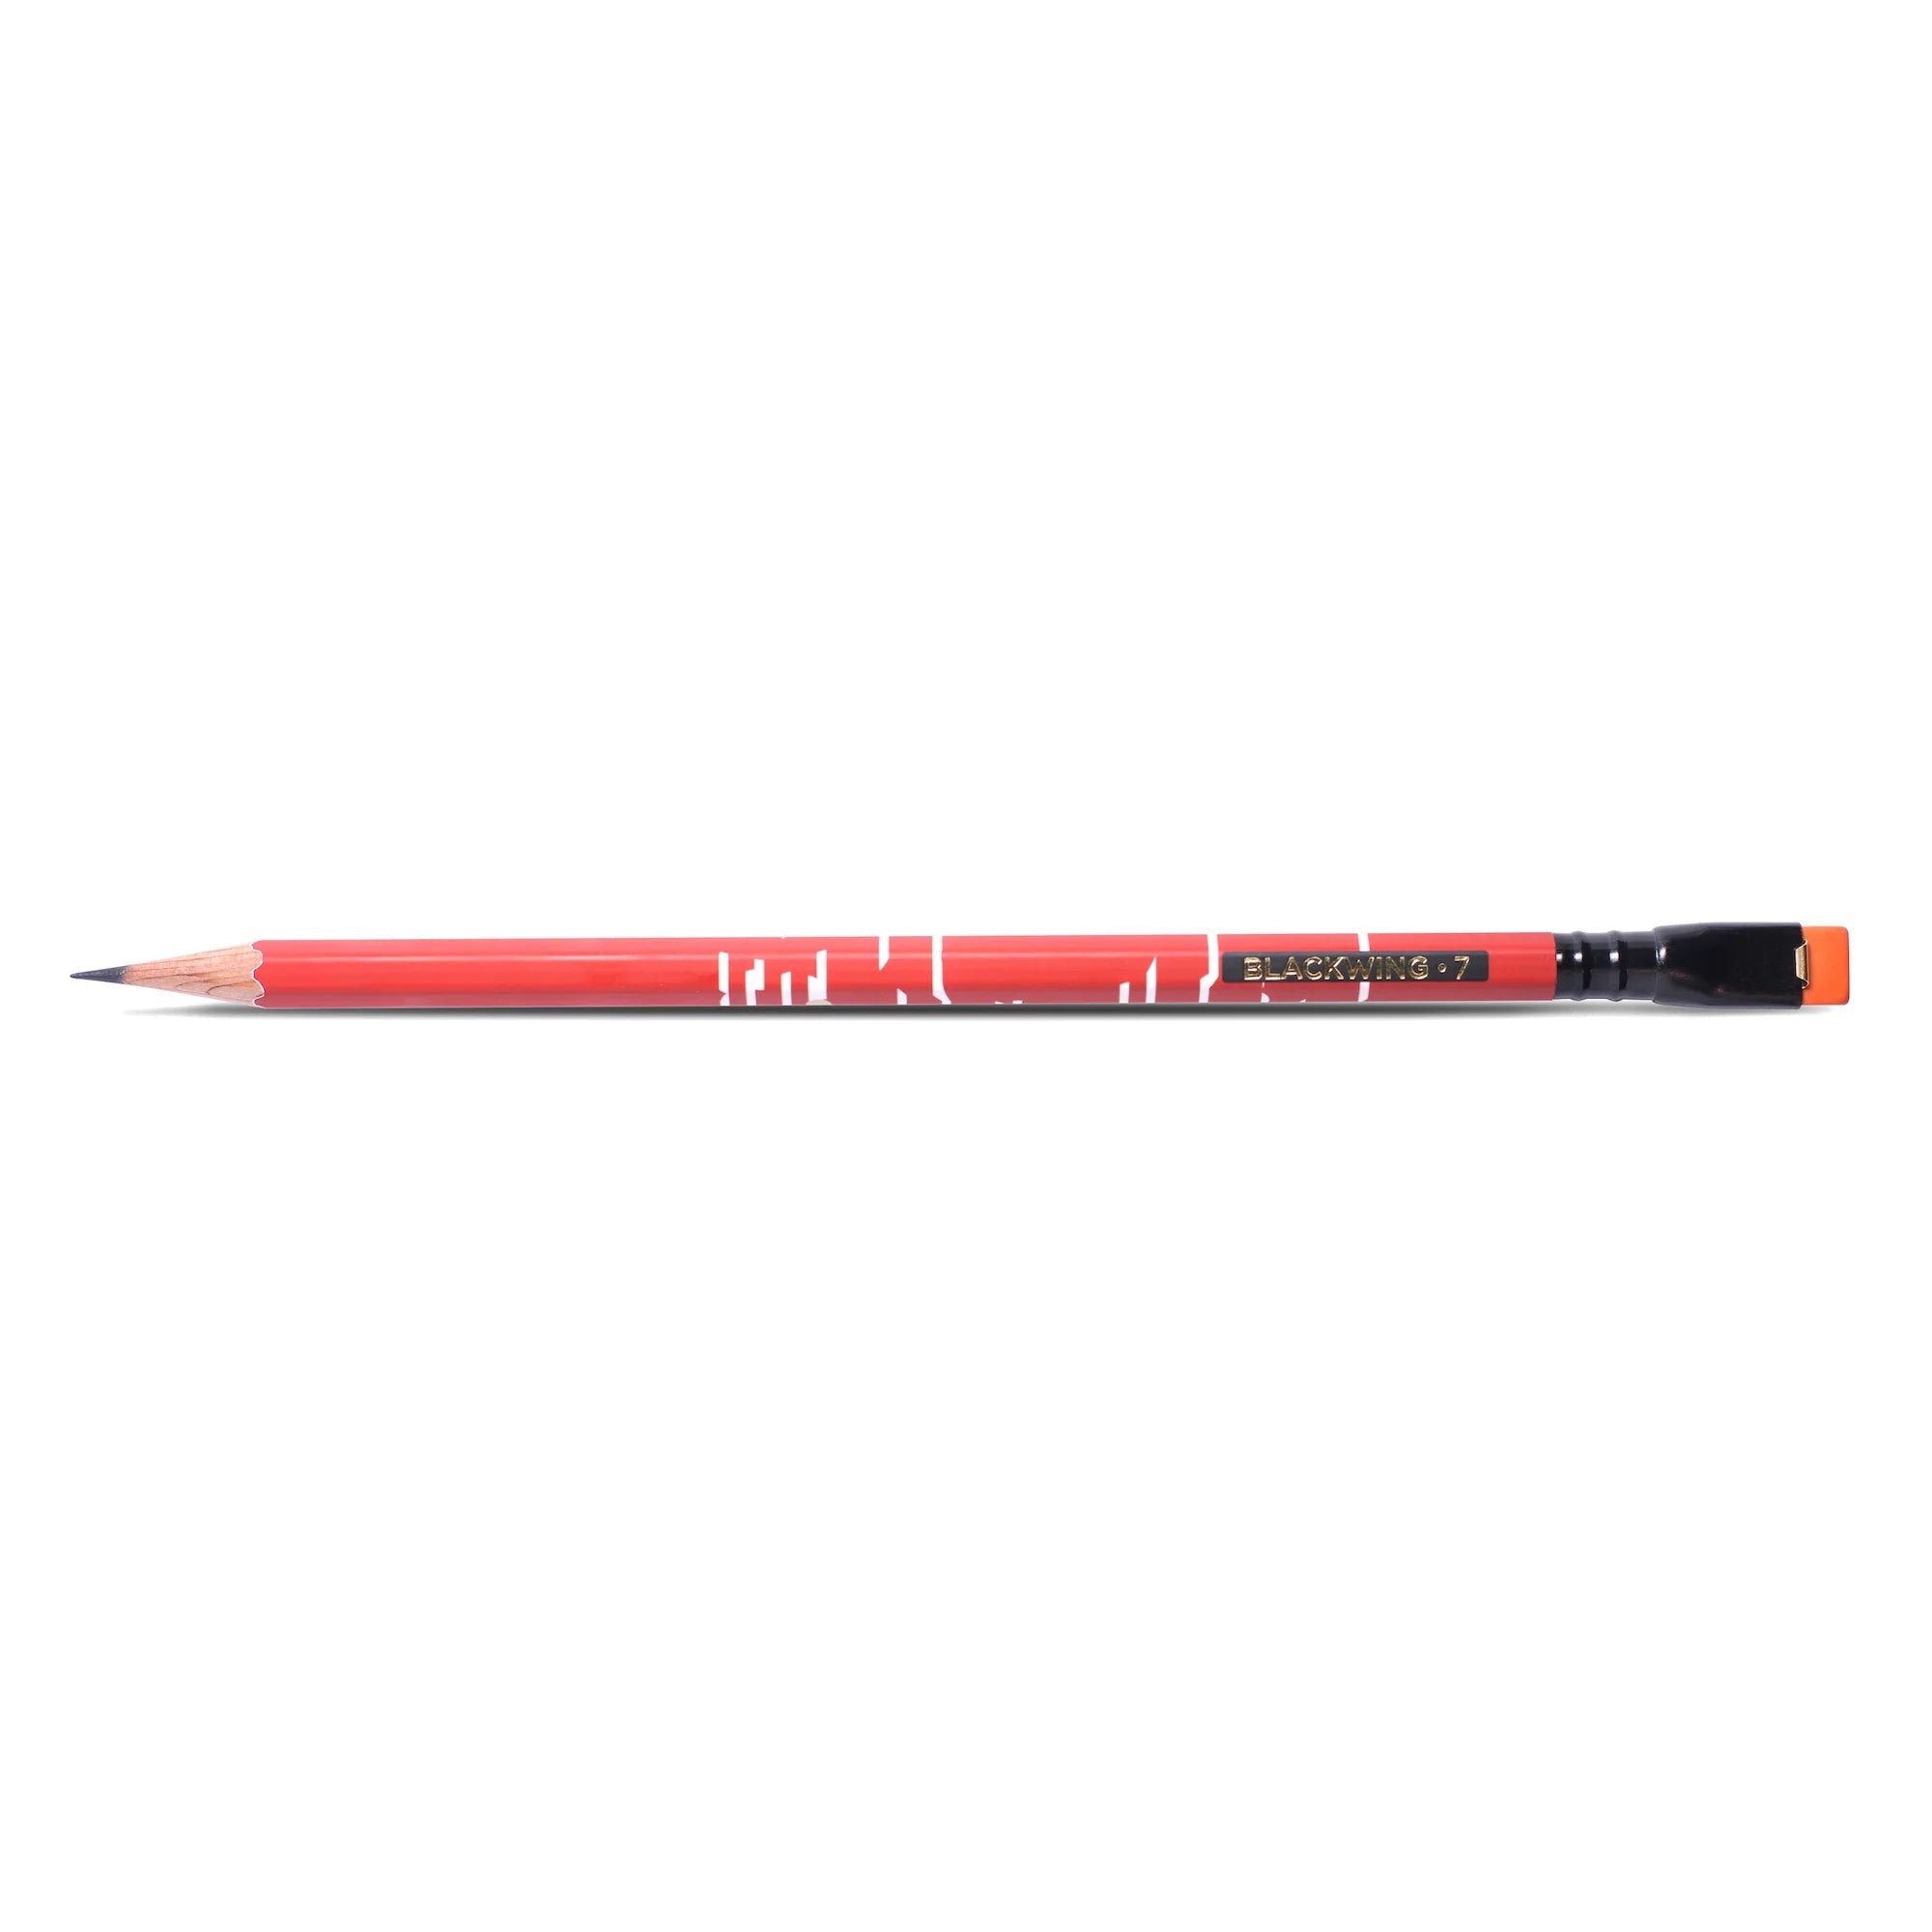 Blackwing Volume 7 Pencil (Set of 12)